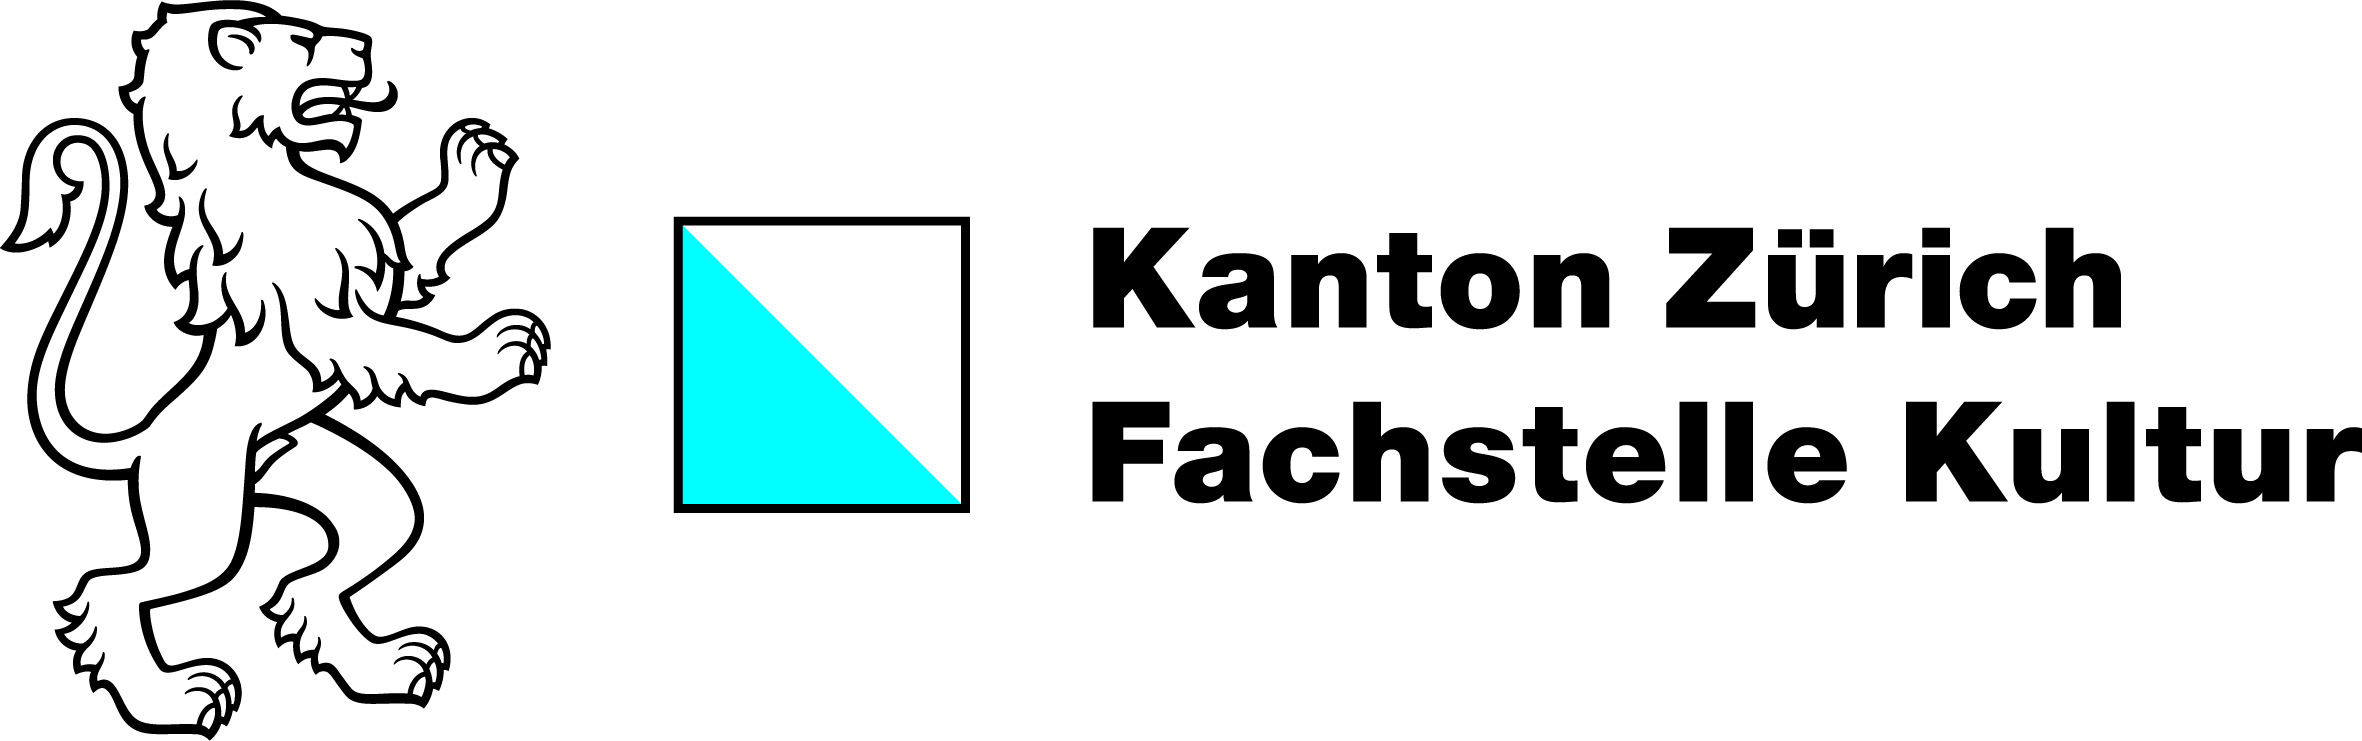 Kanton zürich Logo_Farbe